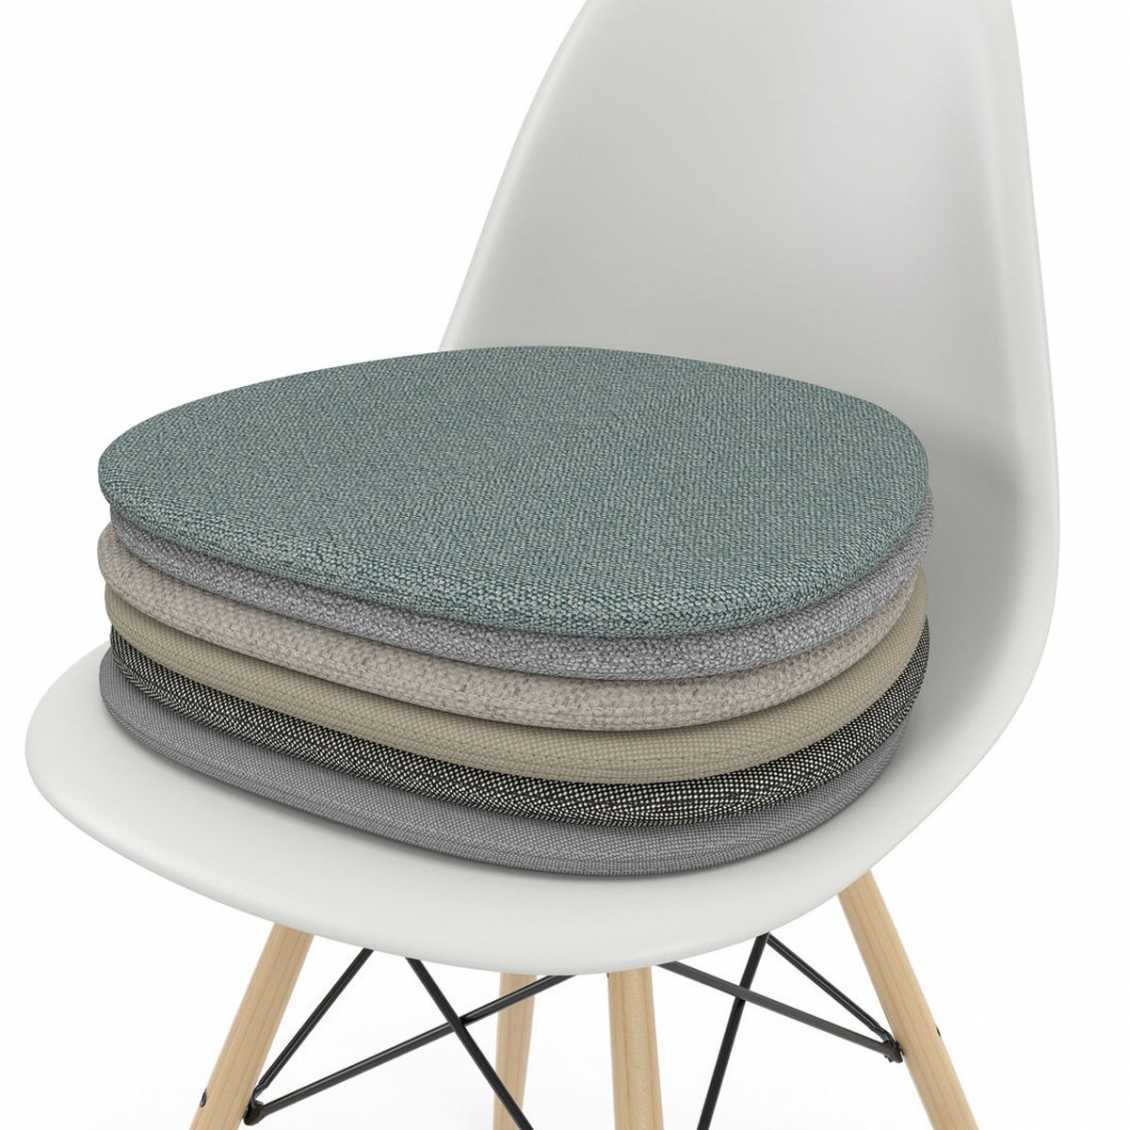 https://www.fundesign.nl/media/catalog/product/6/1/6140560_soft-seats-type-b-beauties-eames-plastic-side-chair_v_fullbleed_1440x_2.jpg